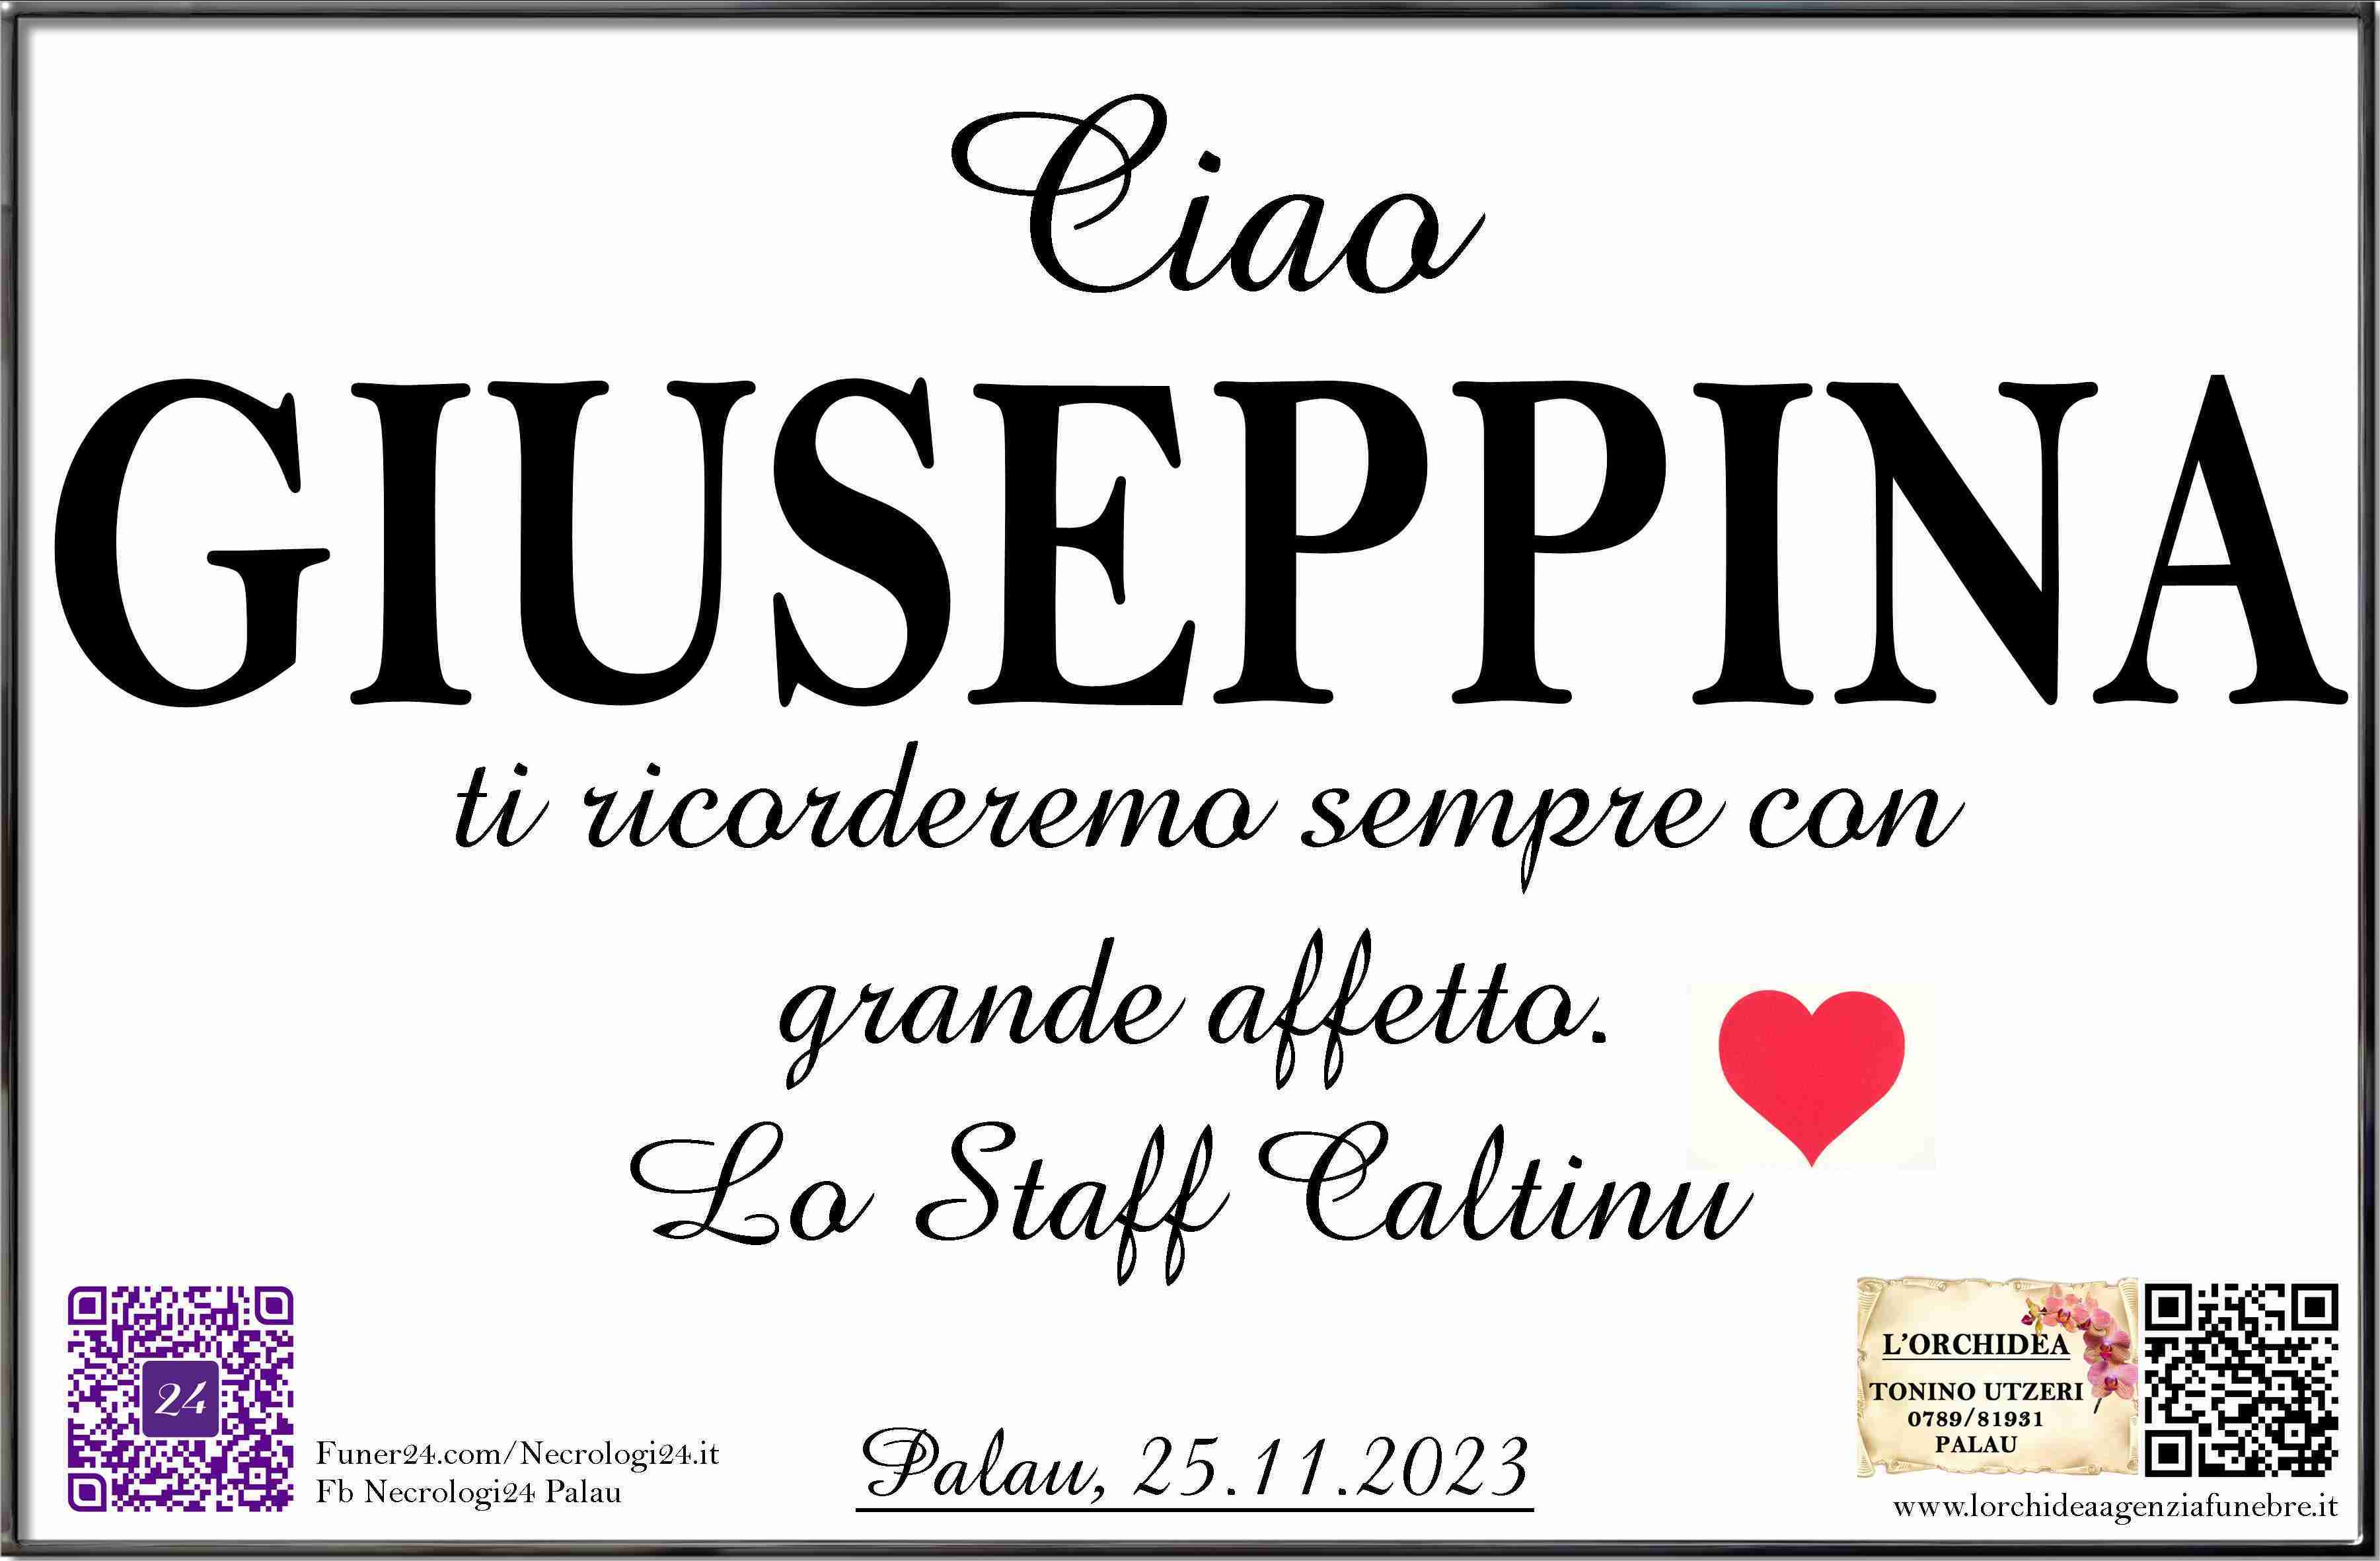 Giuseppina Gala